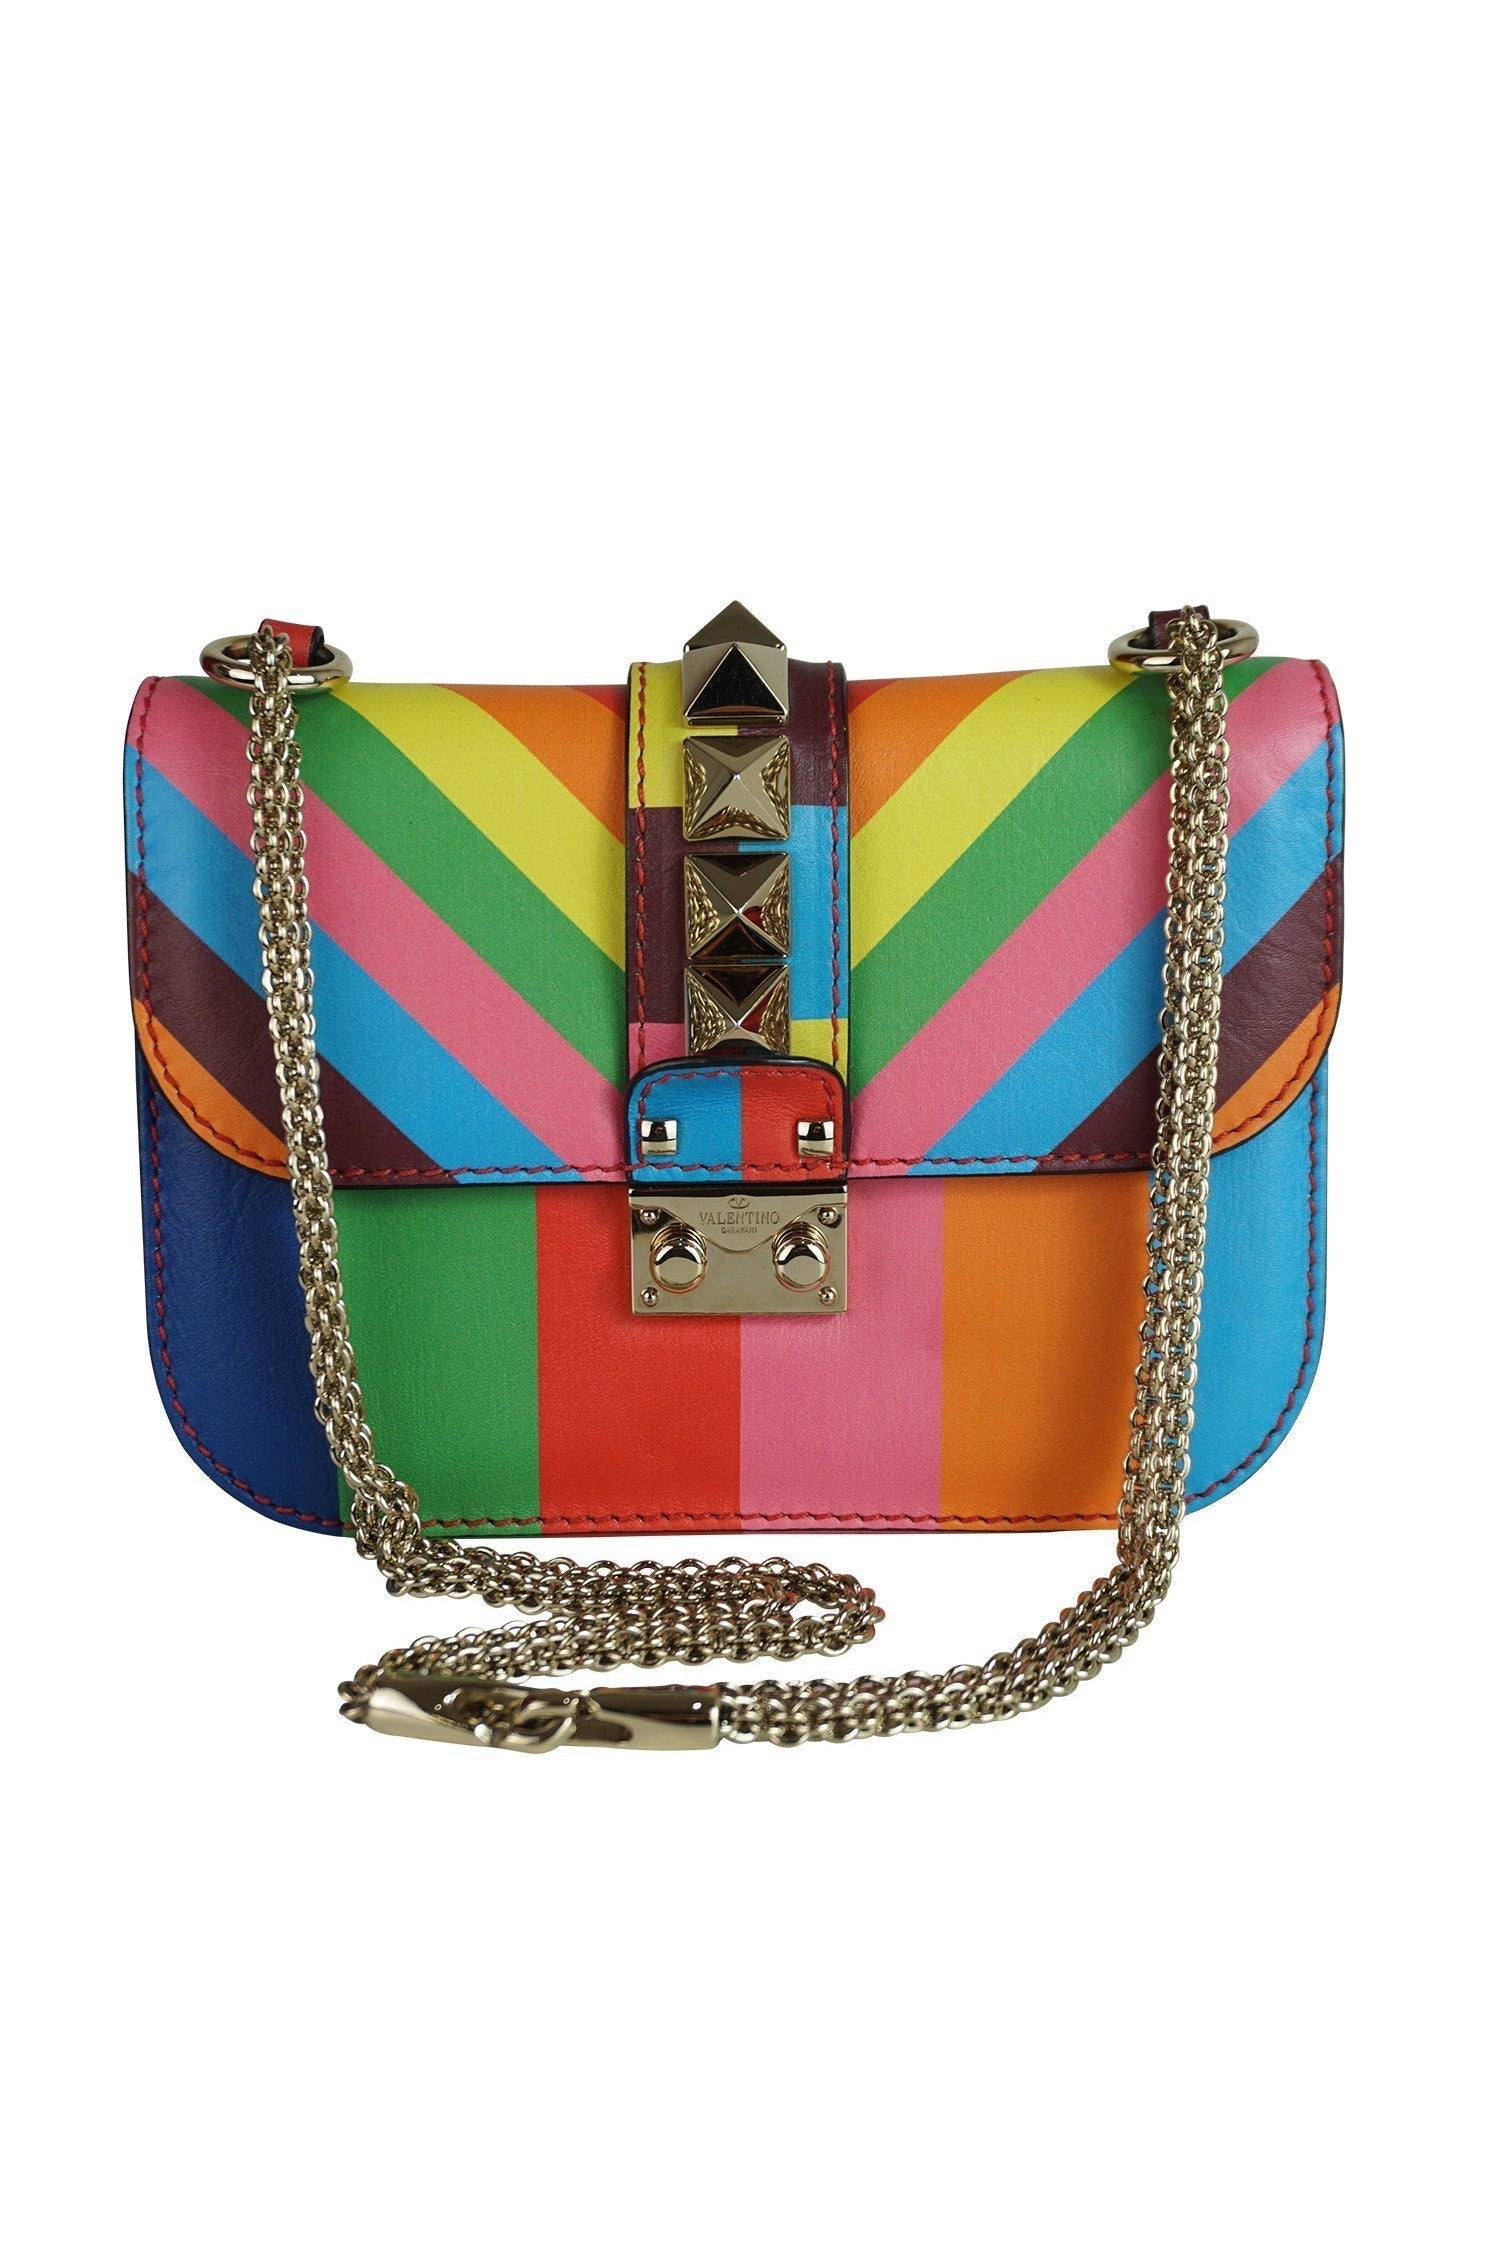 Valentino Rainbow Rockstud Glam Lock Bag 2015 - Foxy Couture Carmel